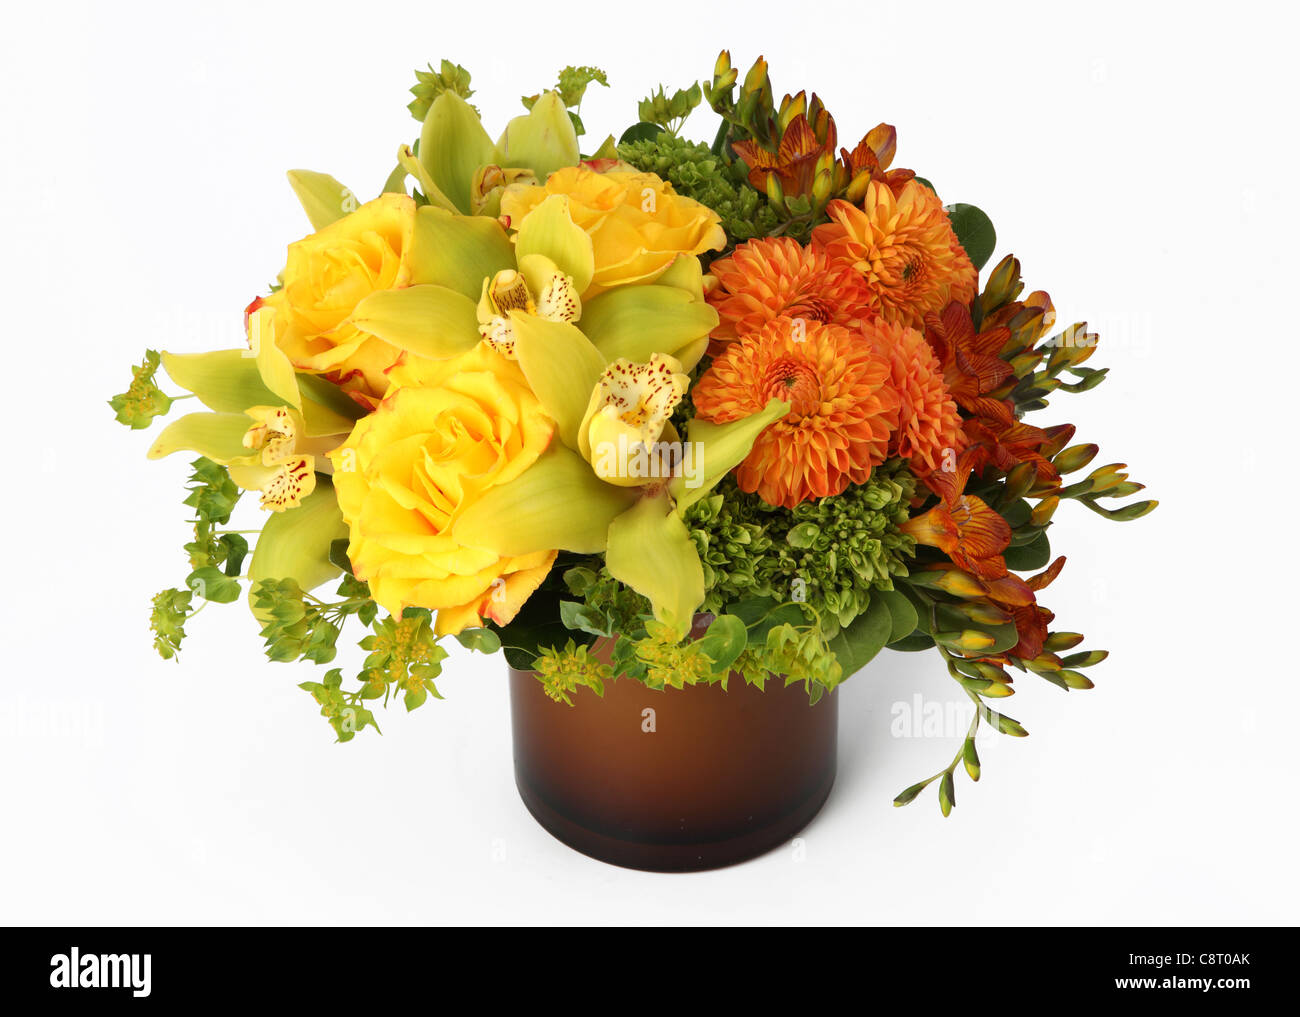 A colorful bouquet of flowers in a vase. Yellow roses, orange dahlias, yellow cymbidium orchids, orange freesias, hydrangea Stock Photo